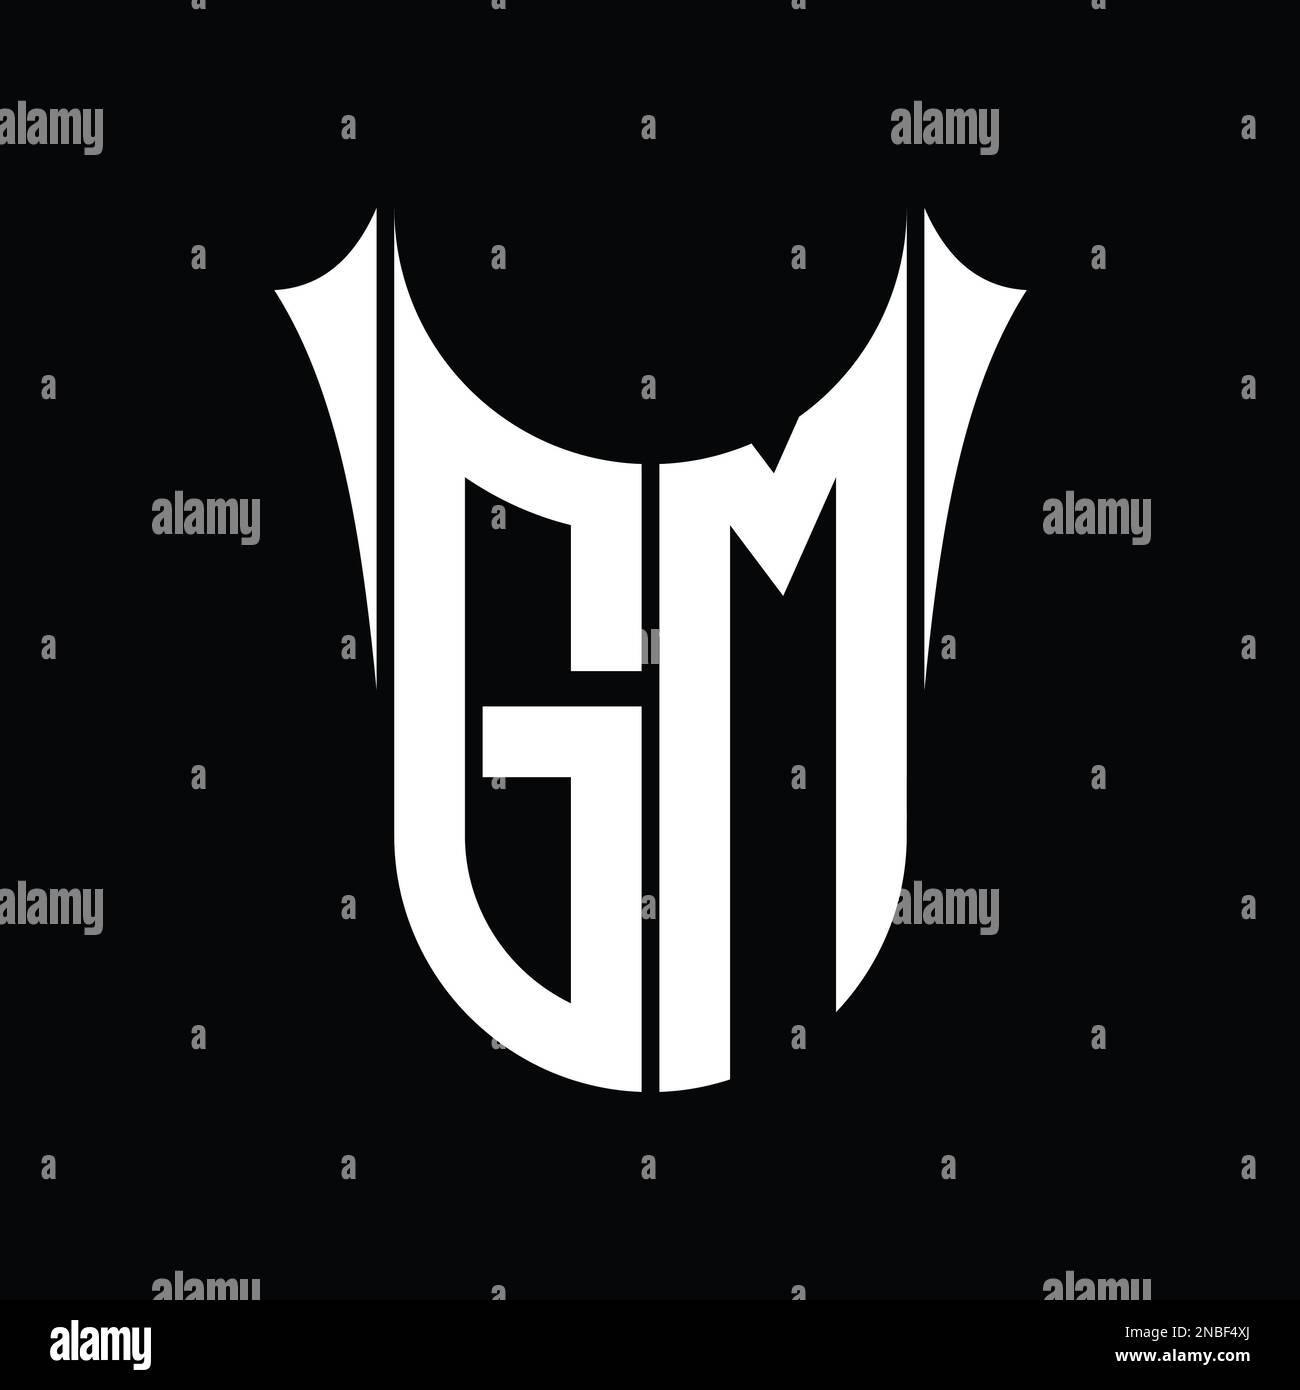 Gm logo monogram shield crown luxury design Vector Image